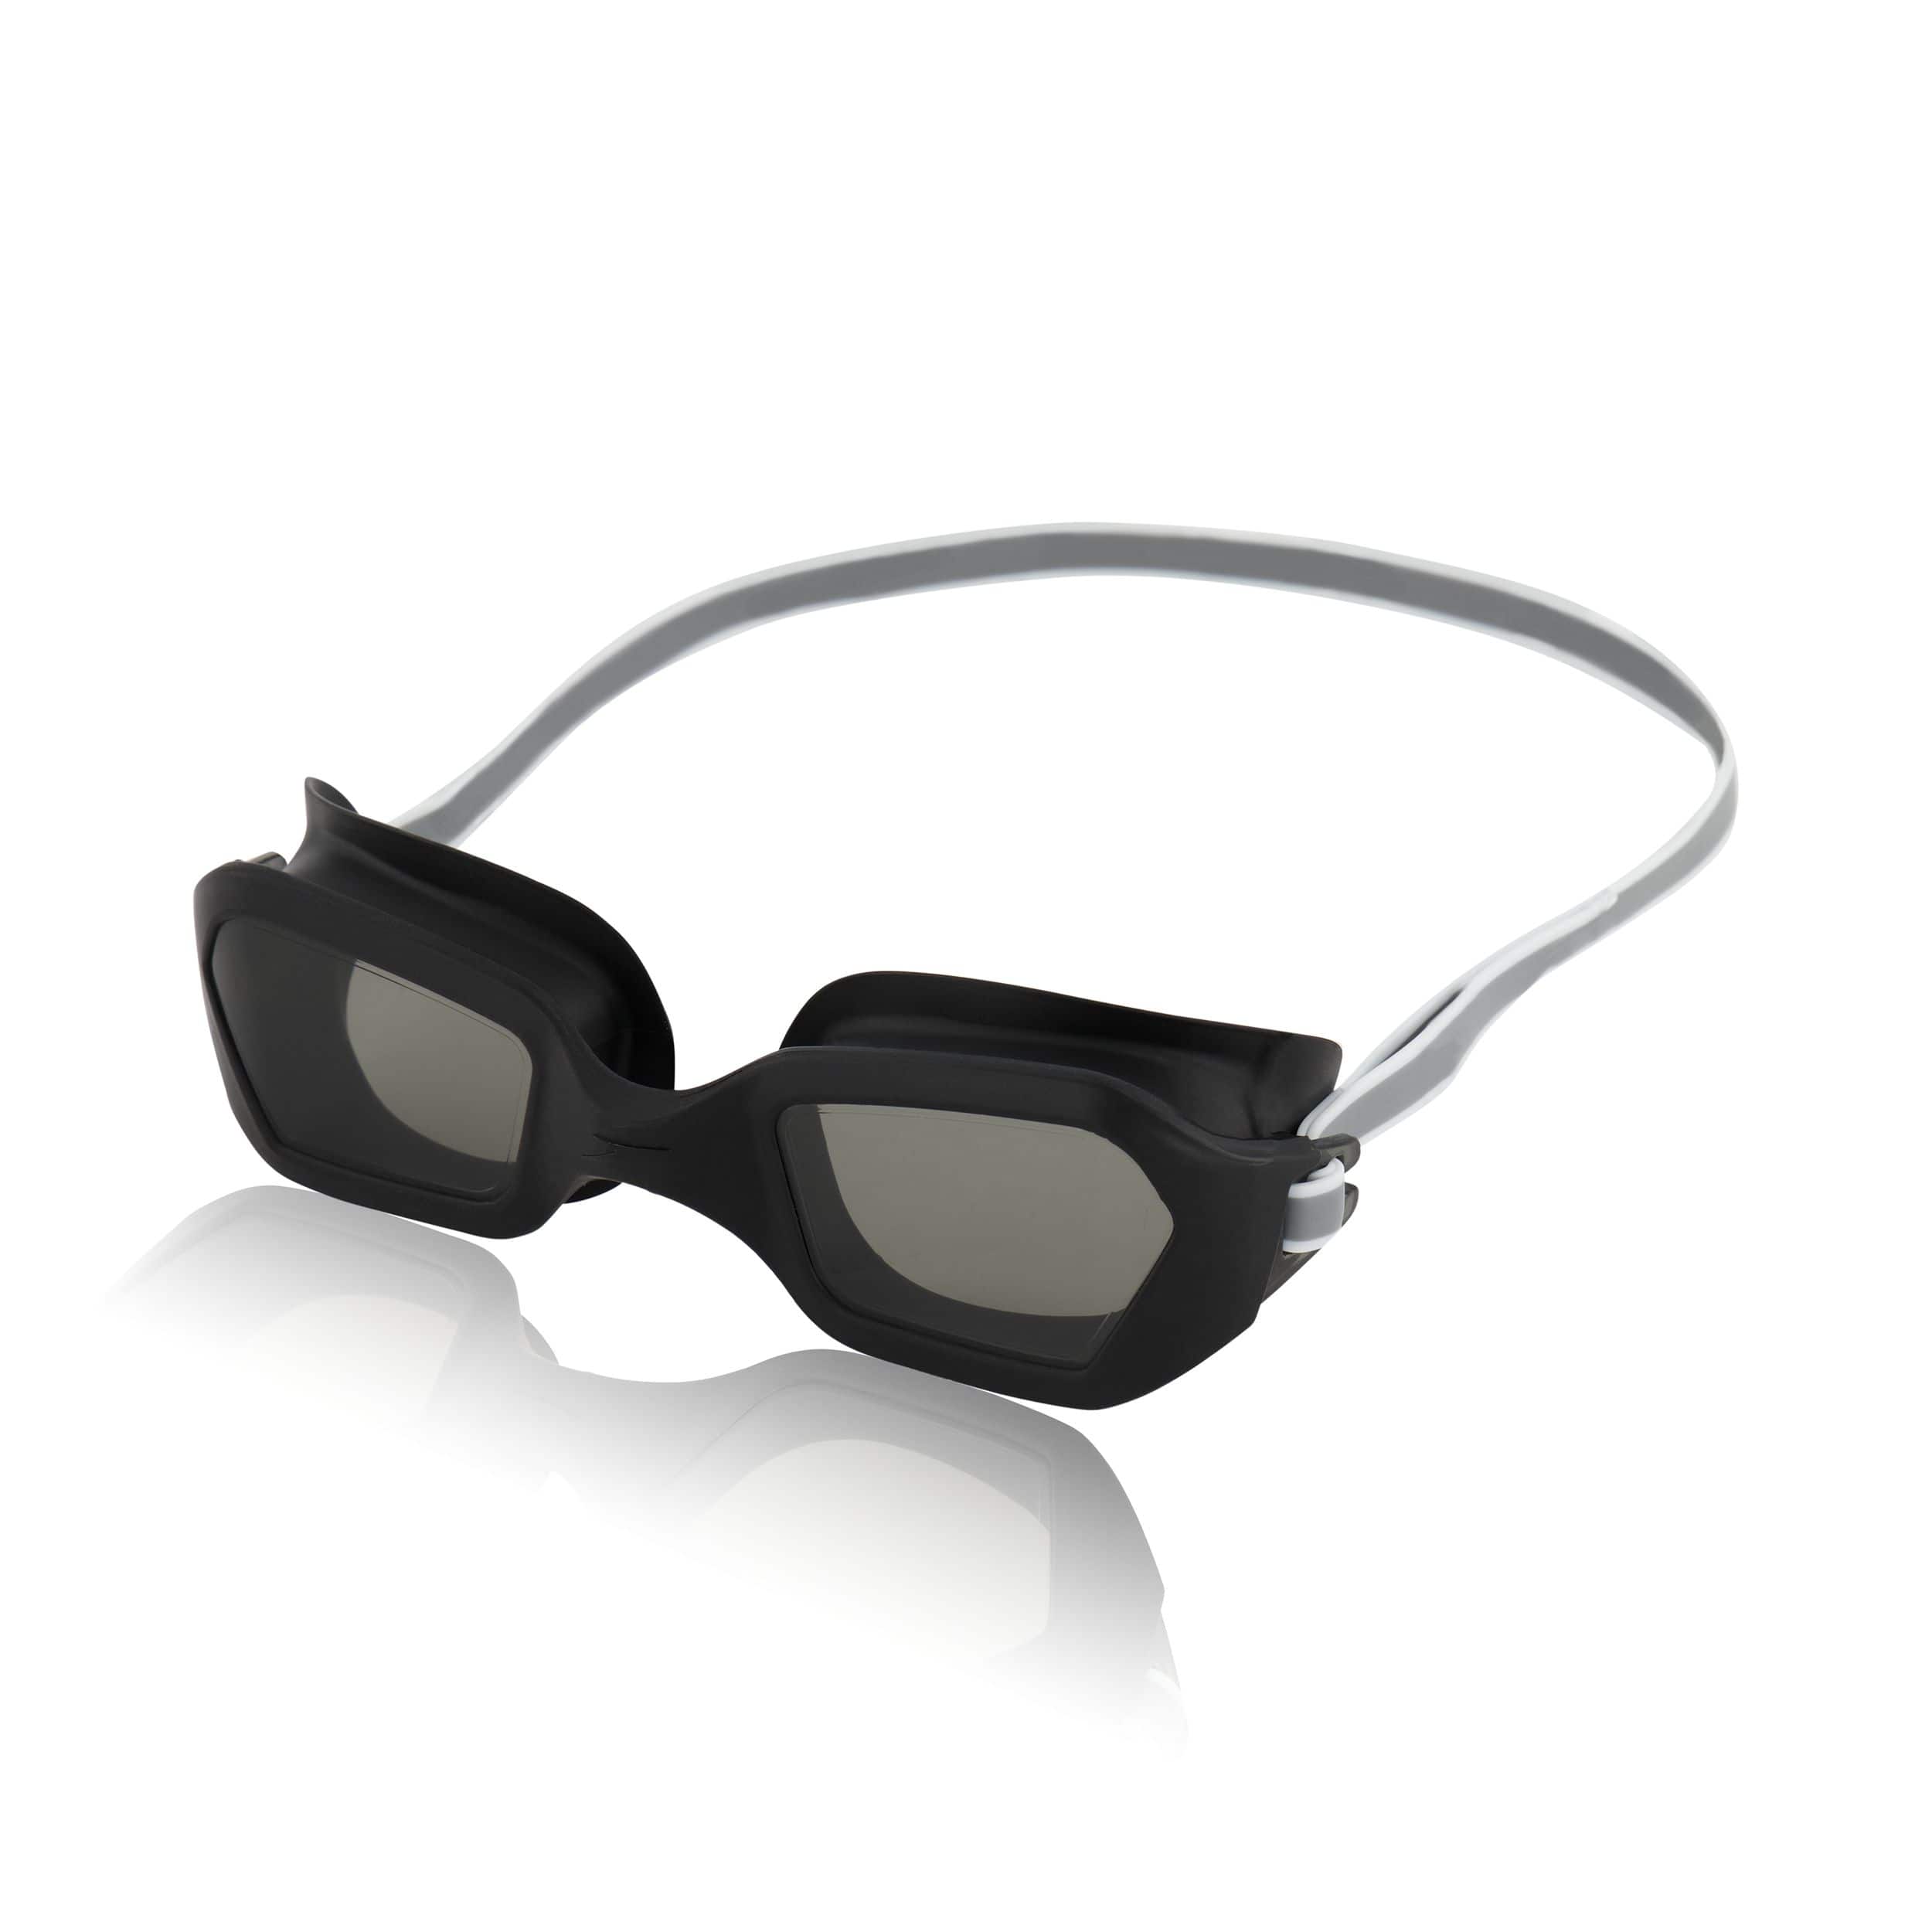 Speedo Anti-Fog UV-Protected Youth/Adult Swim Goggles, Black/Grey, Ages 14+